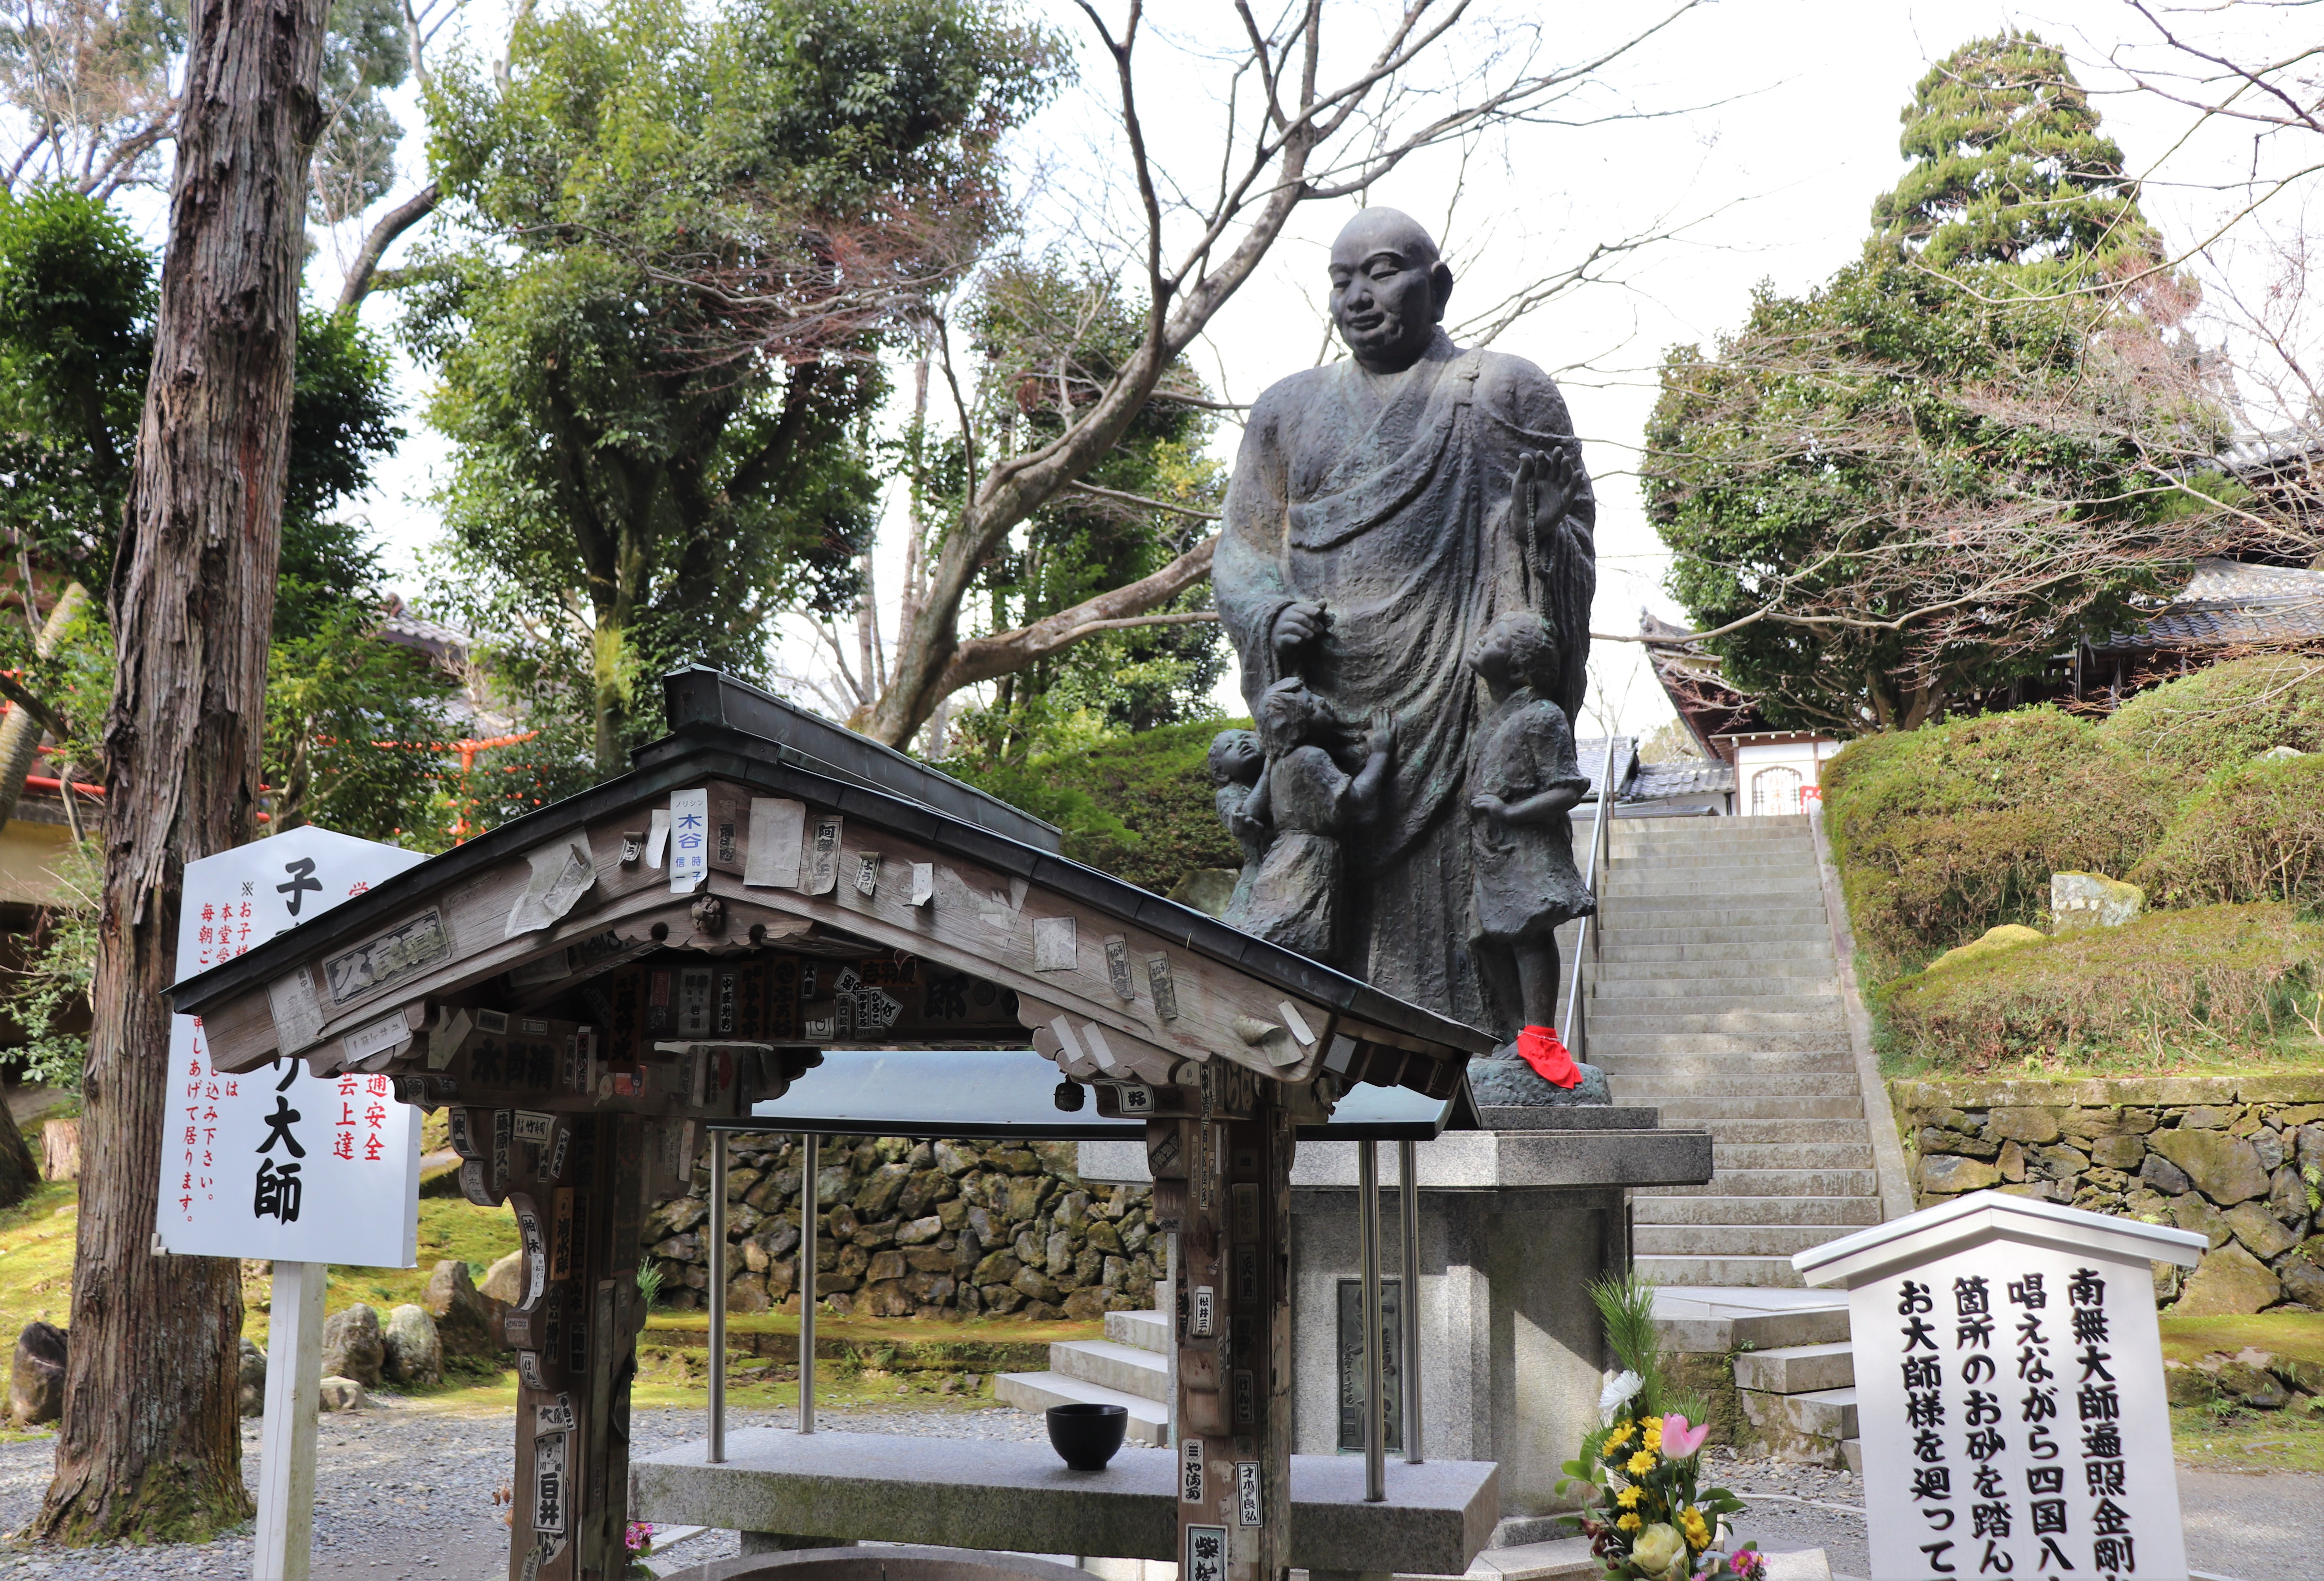 Statue of Kukai protecting children, at Imakumano Kannon-ji Temple